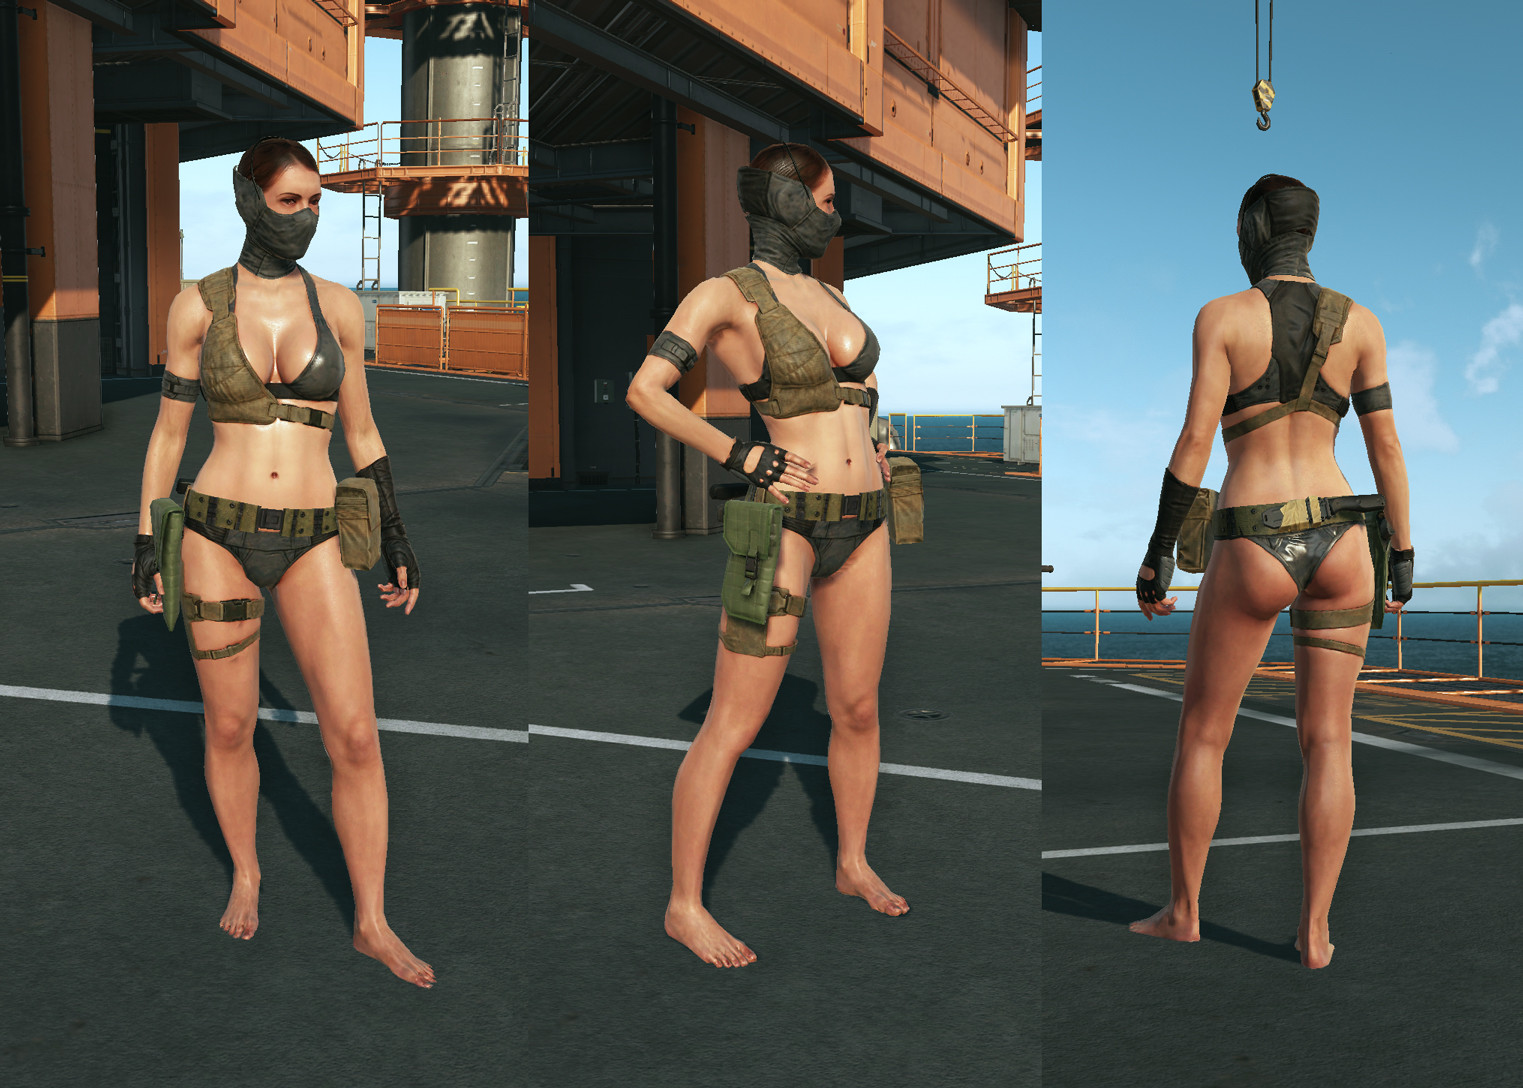 Metal Gear Solid V: The Phantom Pain Receives Swimwear Uniforms to